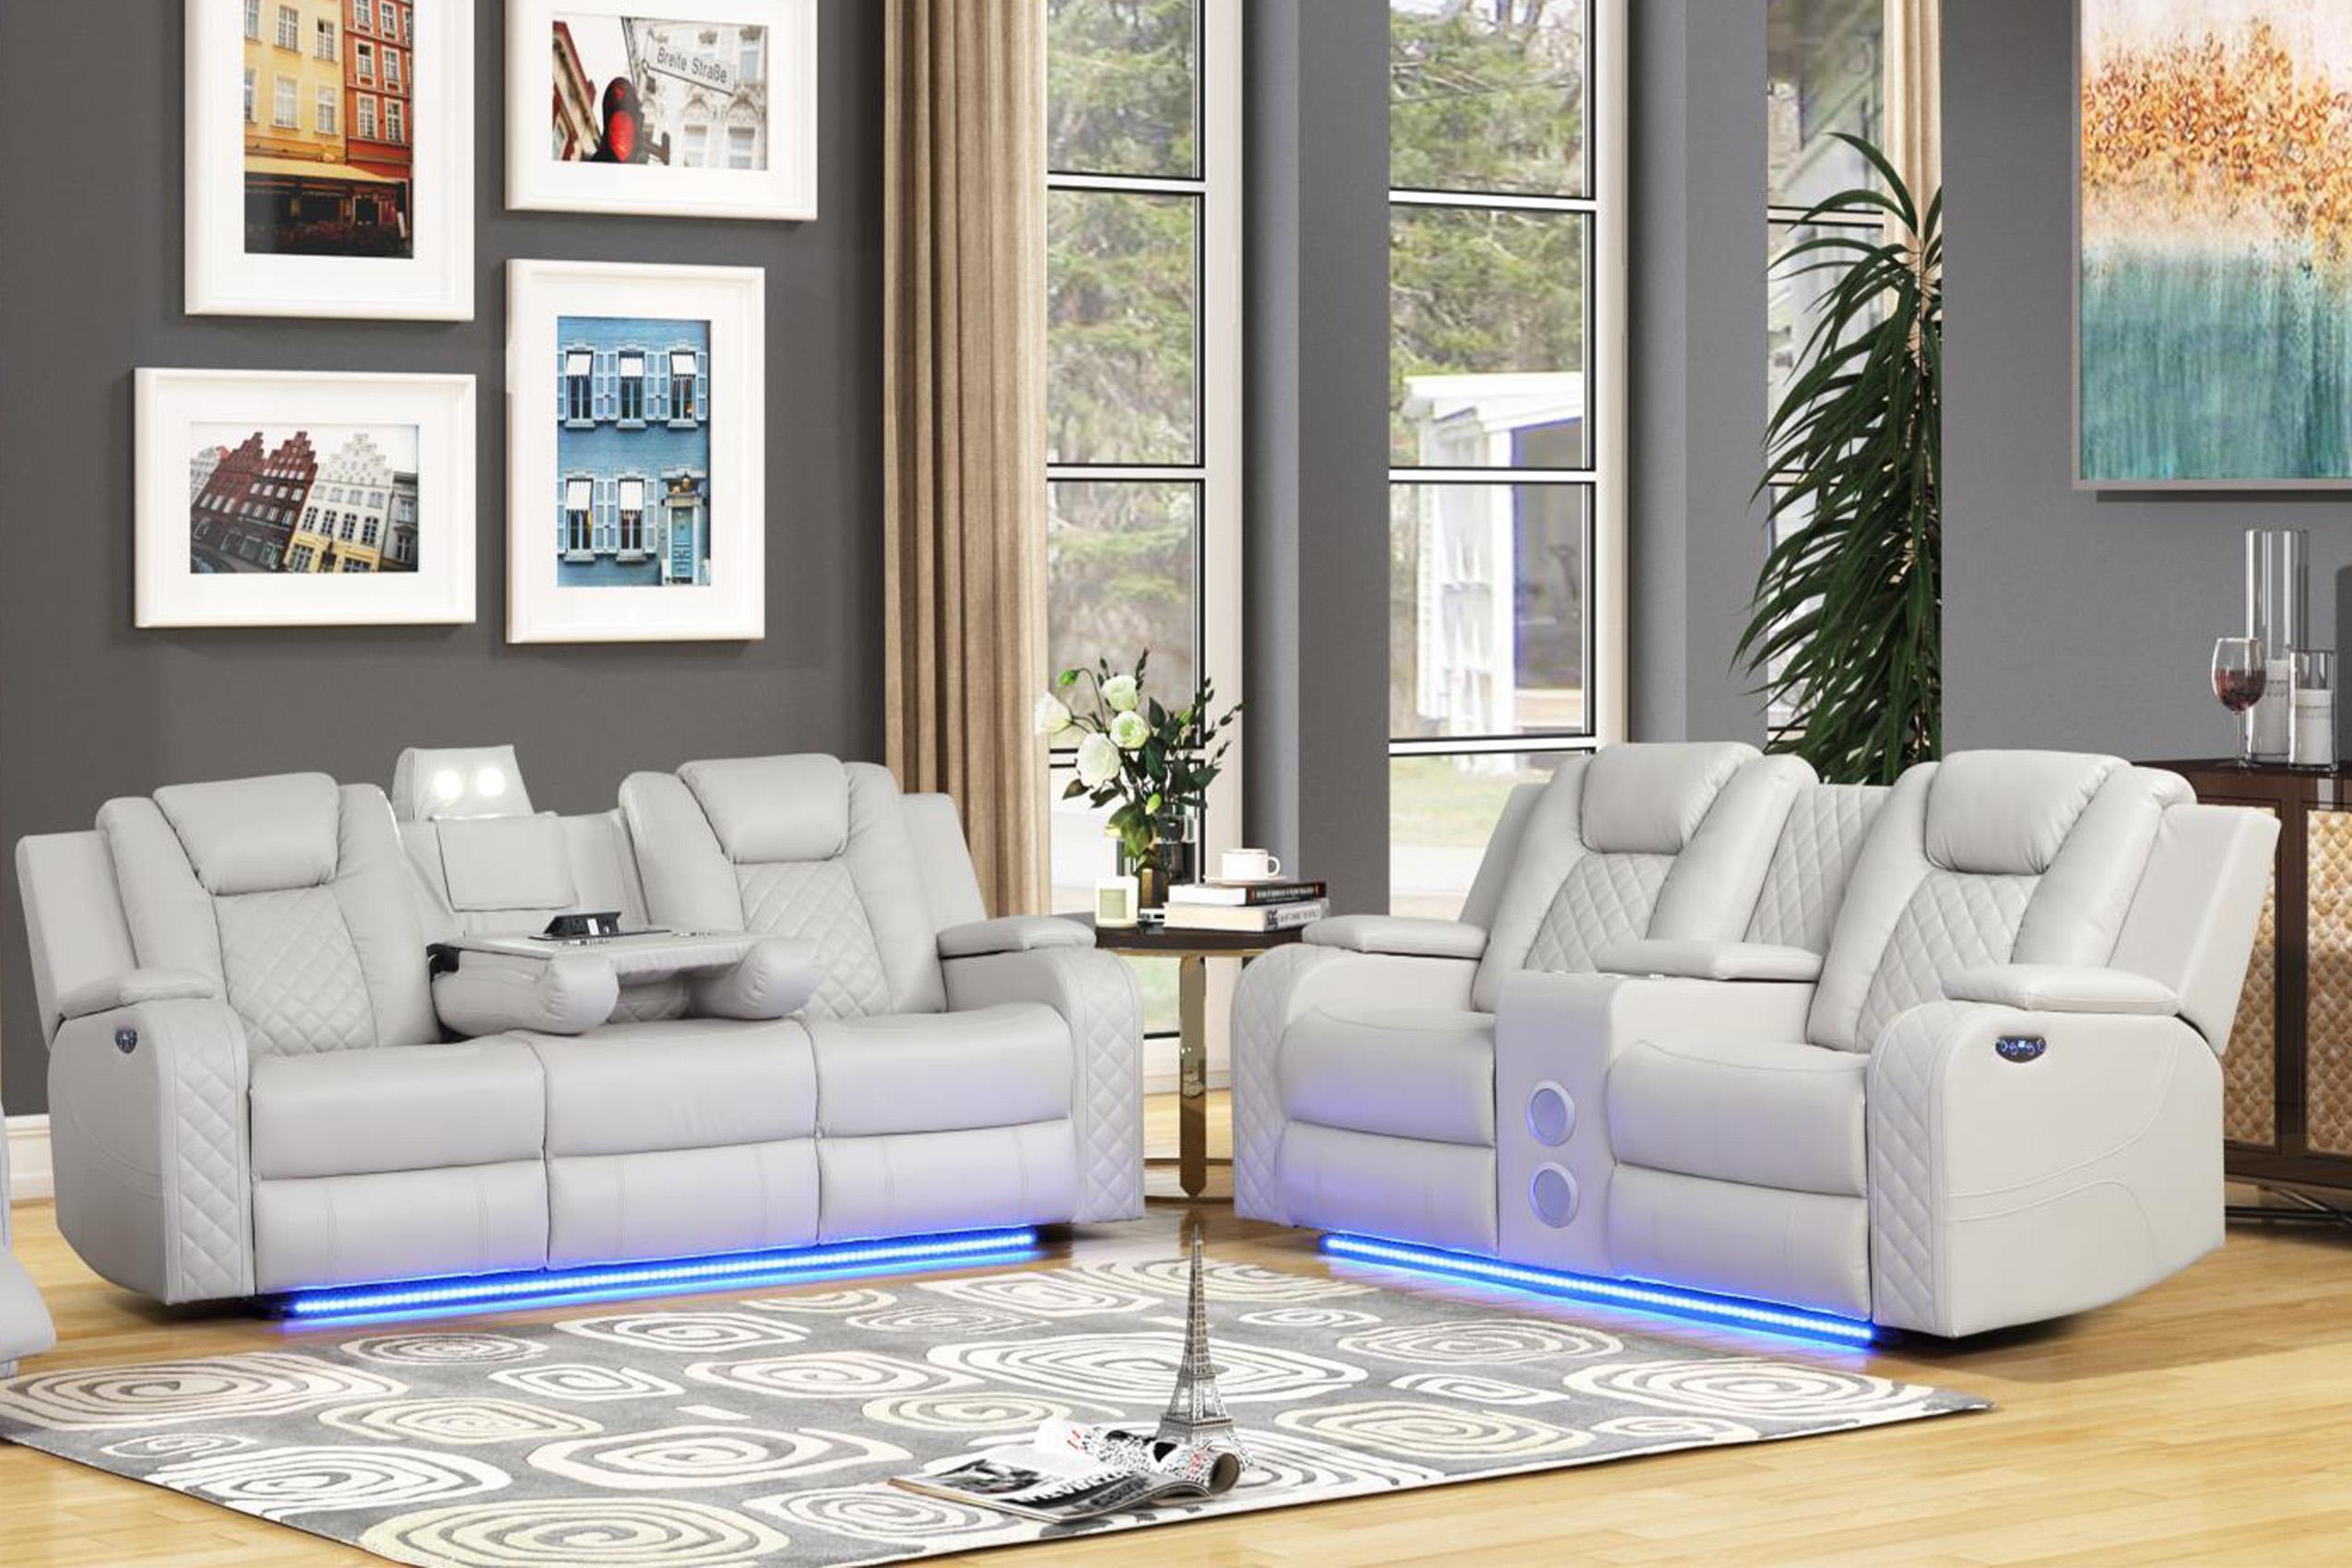 Galaxy Home Furniture BENZ ICE WHITE Recliner Sofa Set